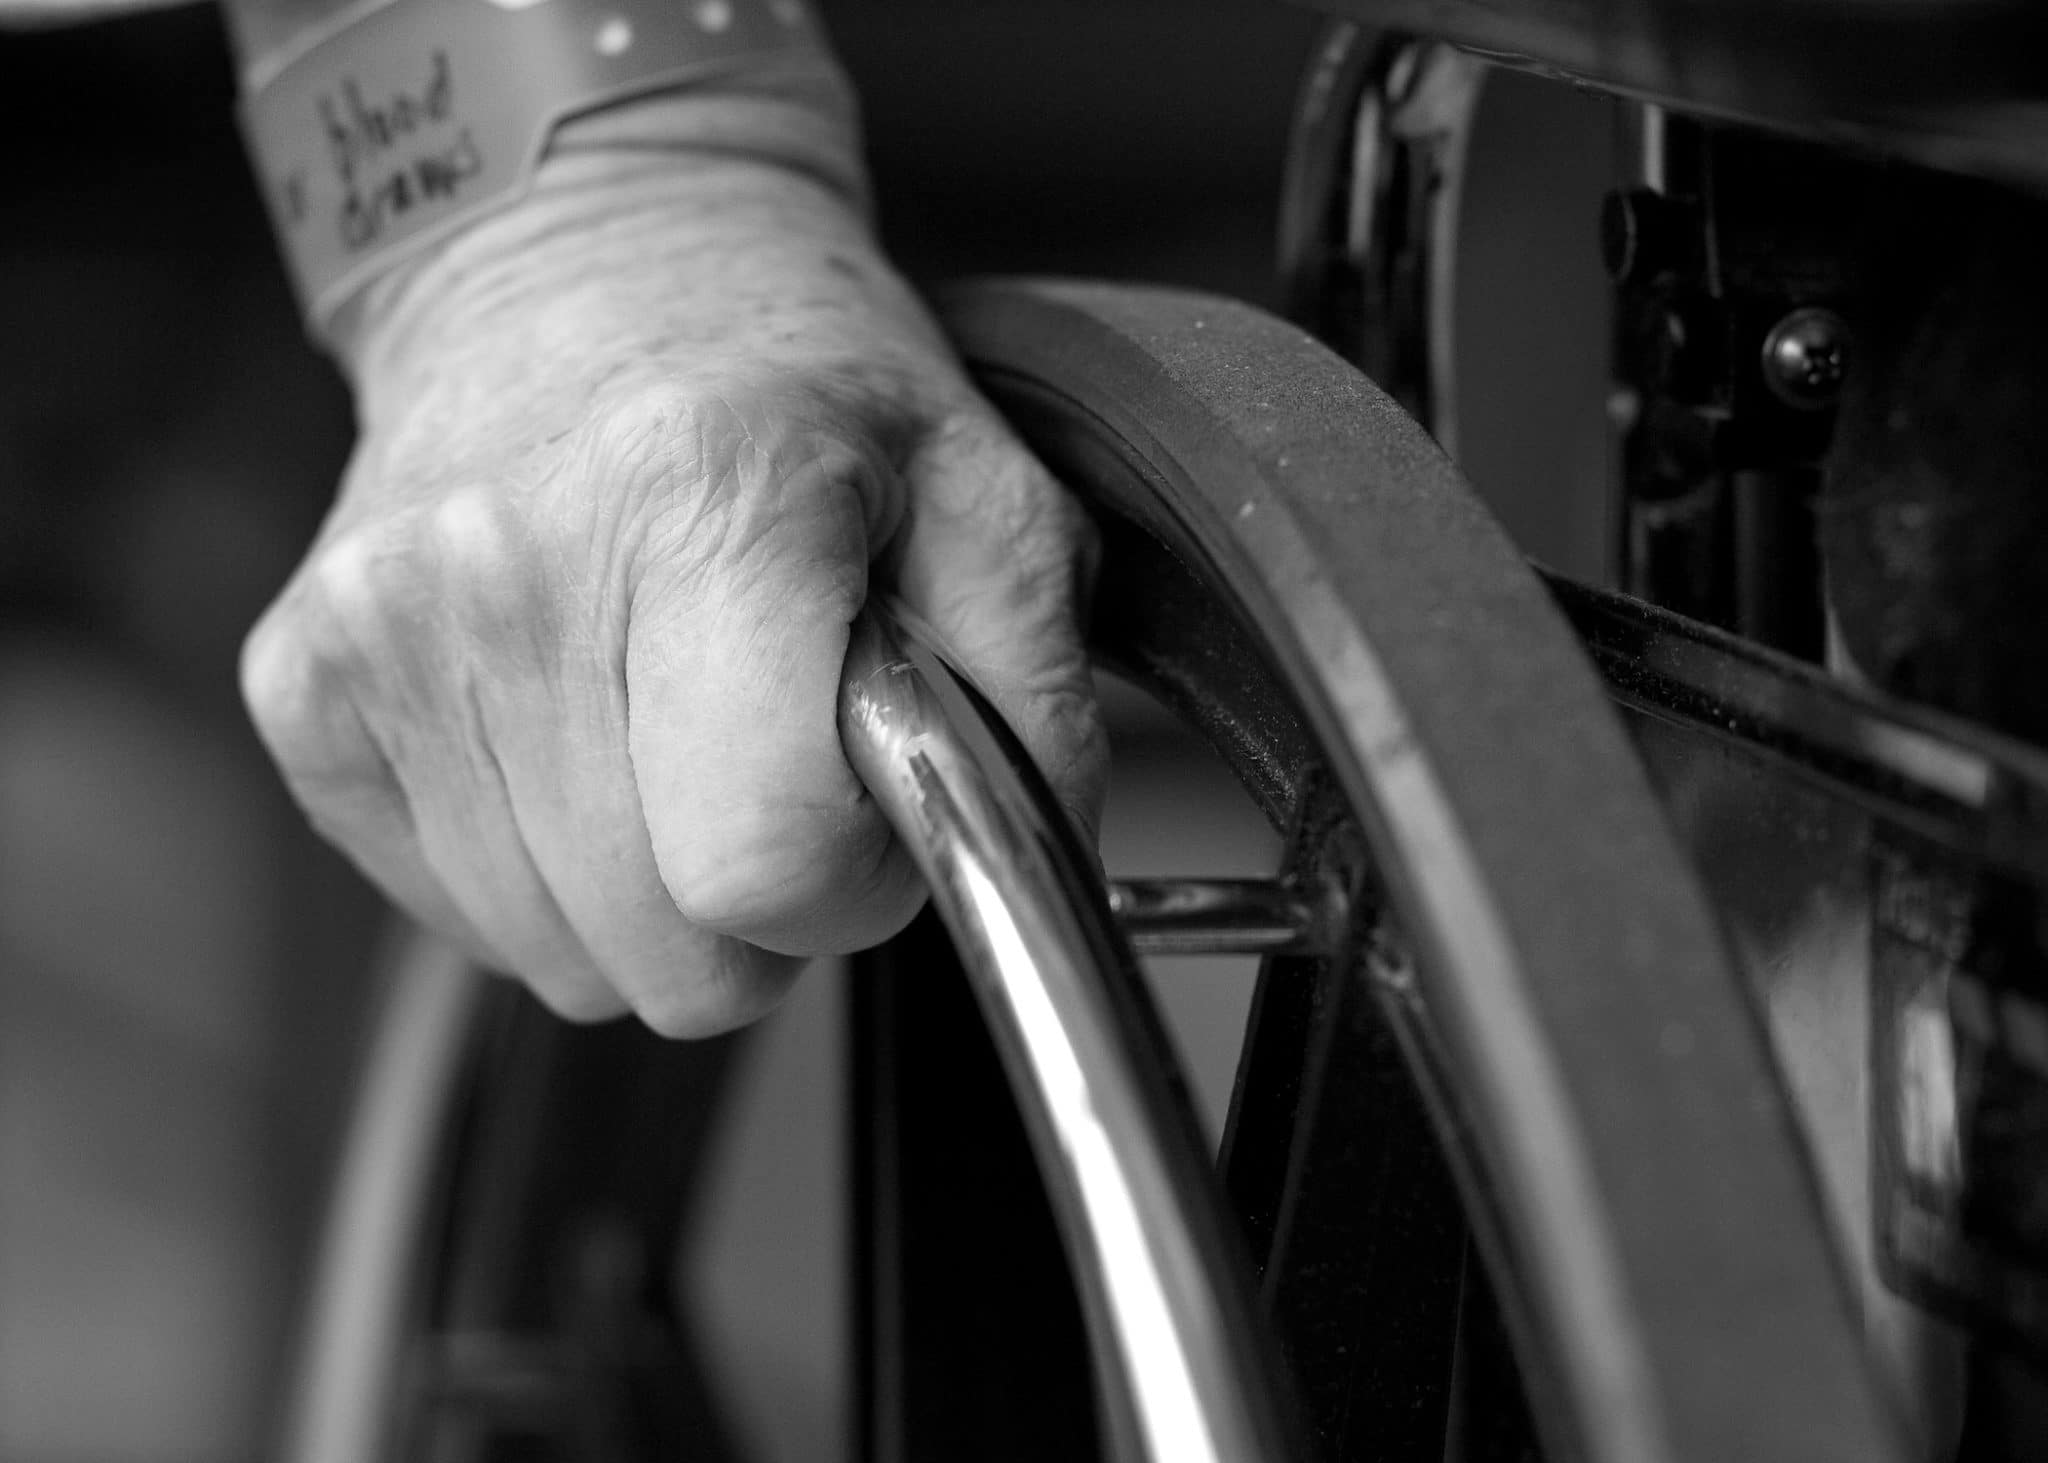 https://wheel-life.com/wp-content/uploads/2013/05/wheelchairbandwrist.jpg